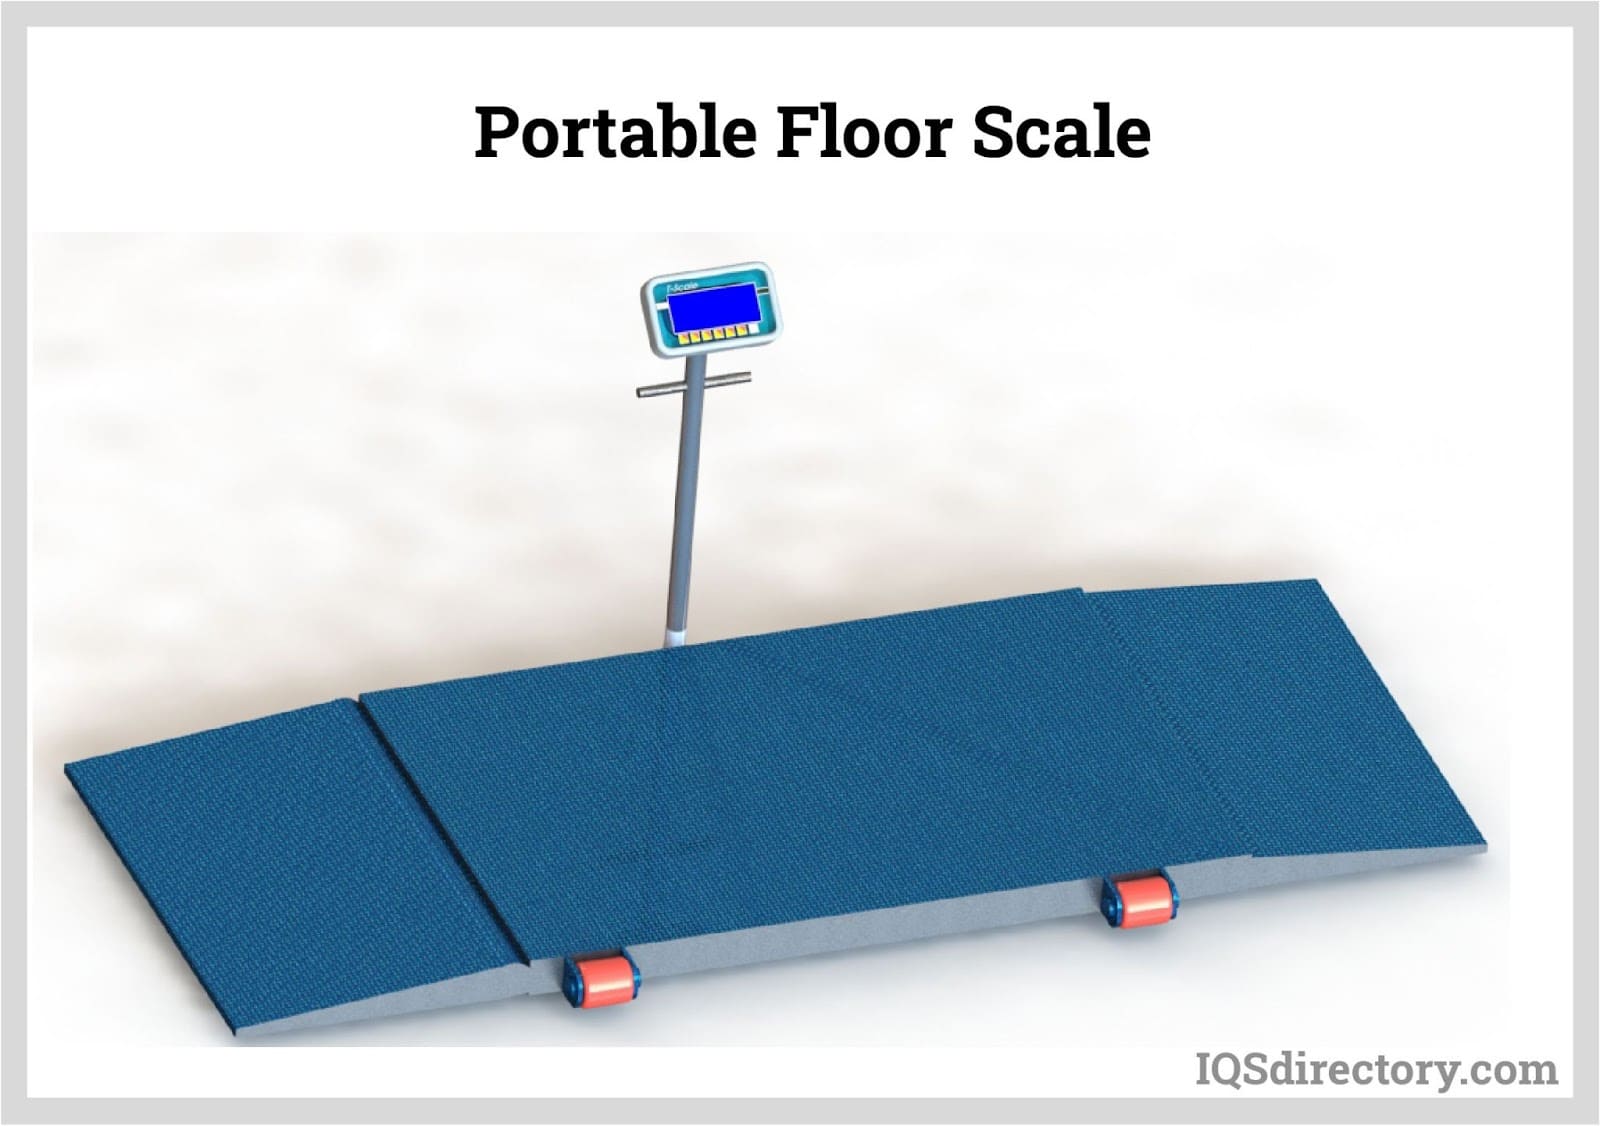  Medical Grade Floor Scale - Portable - Easy to Read